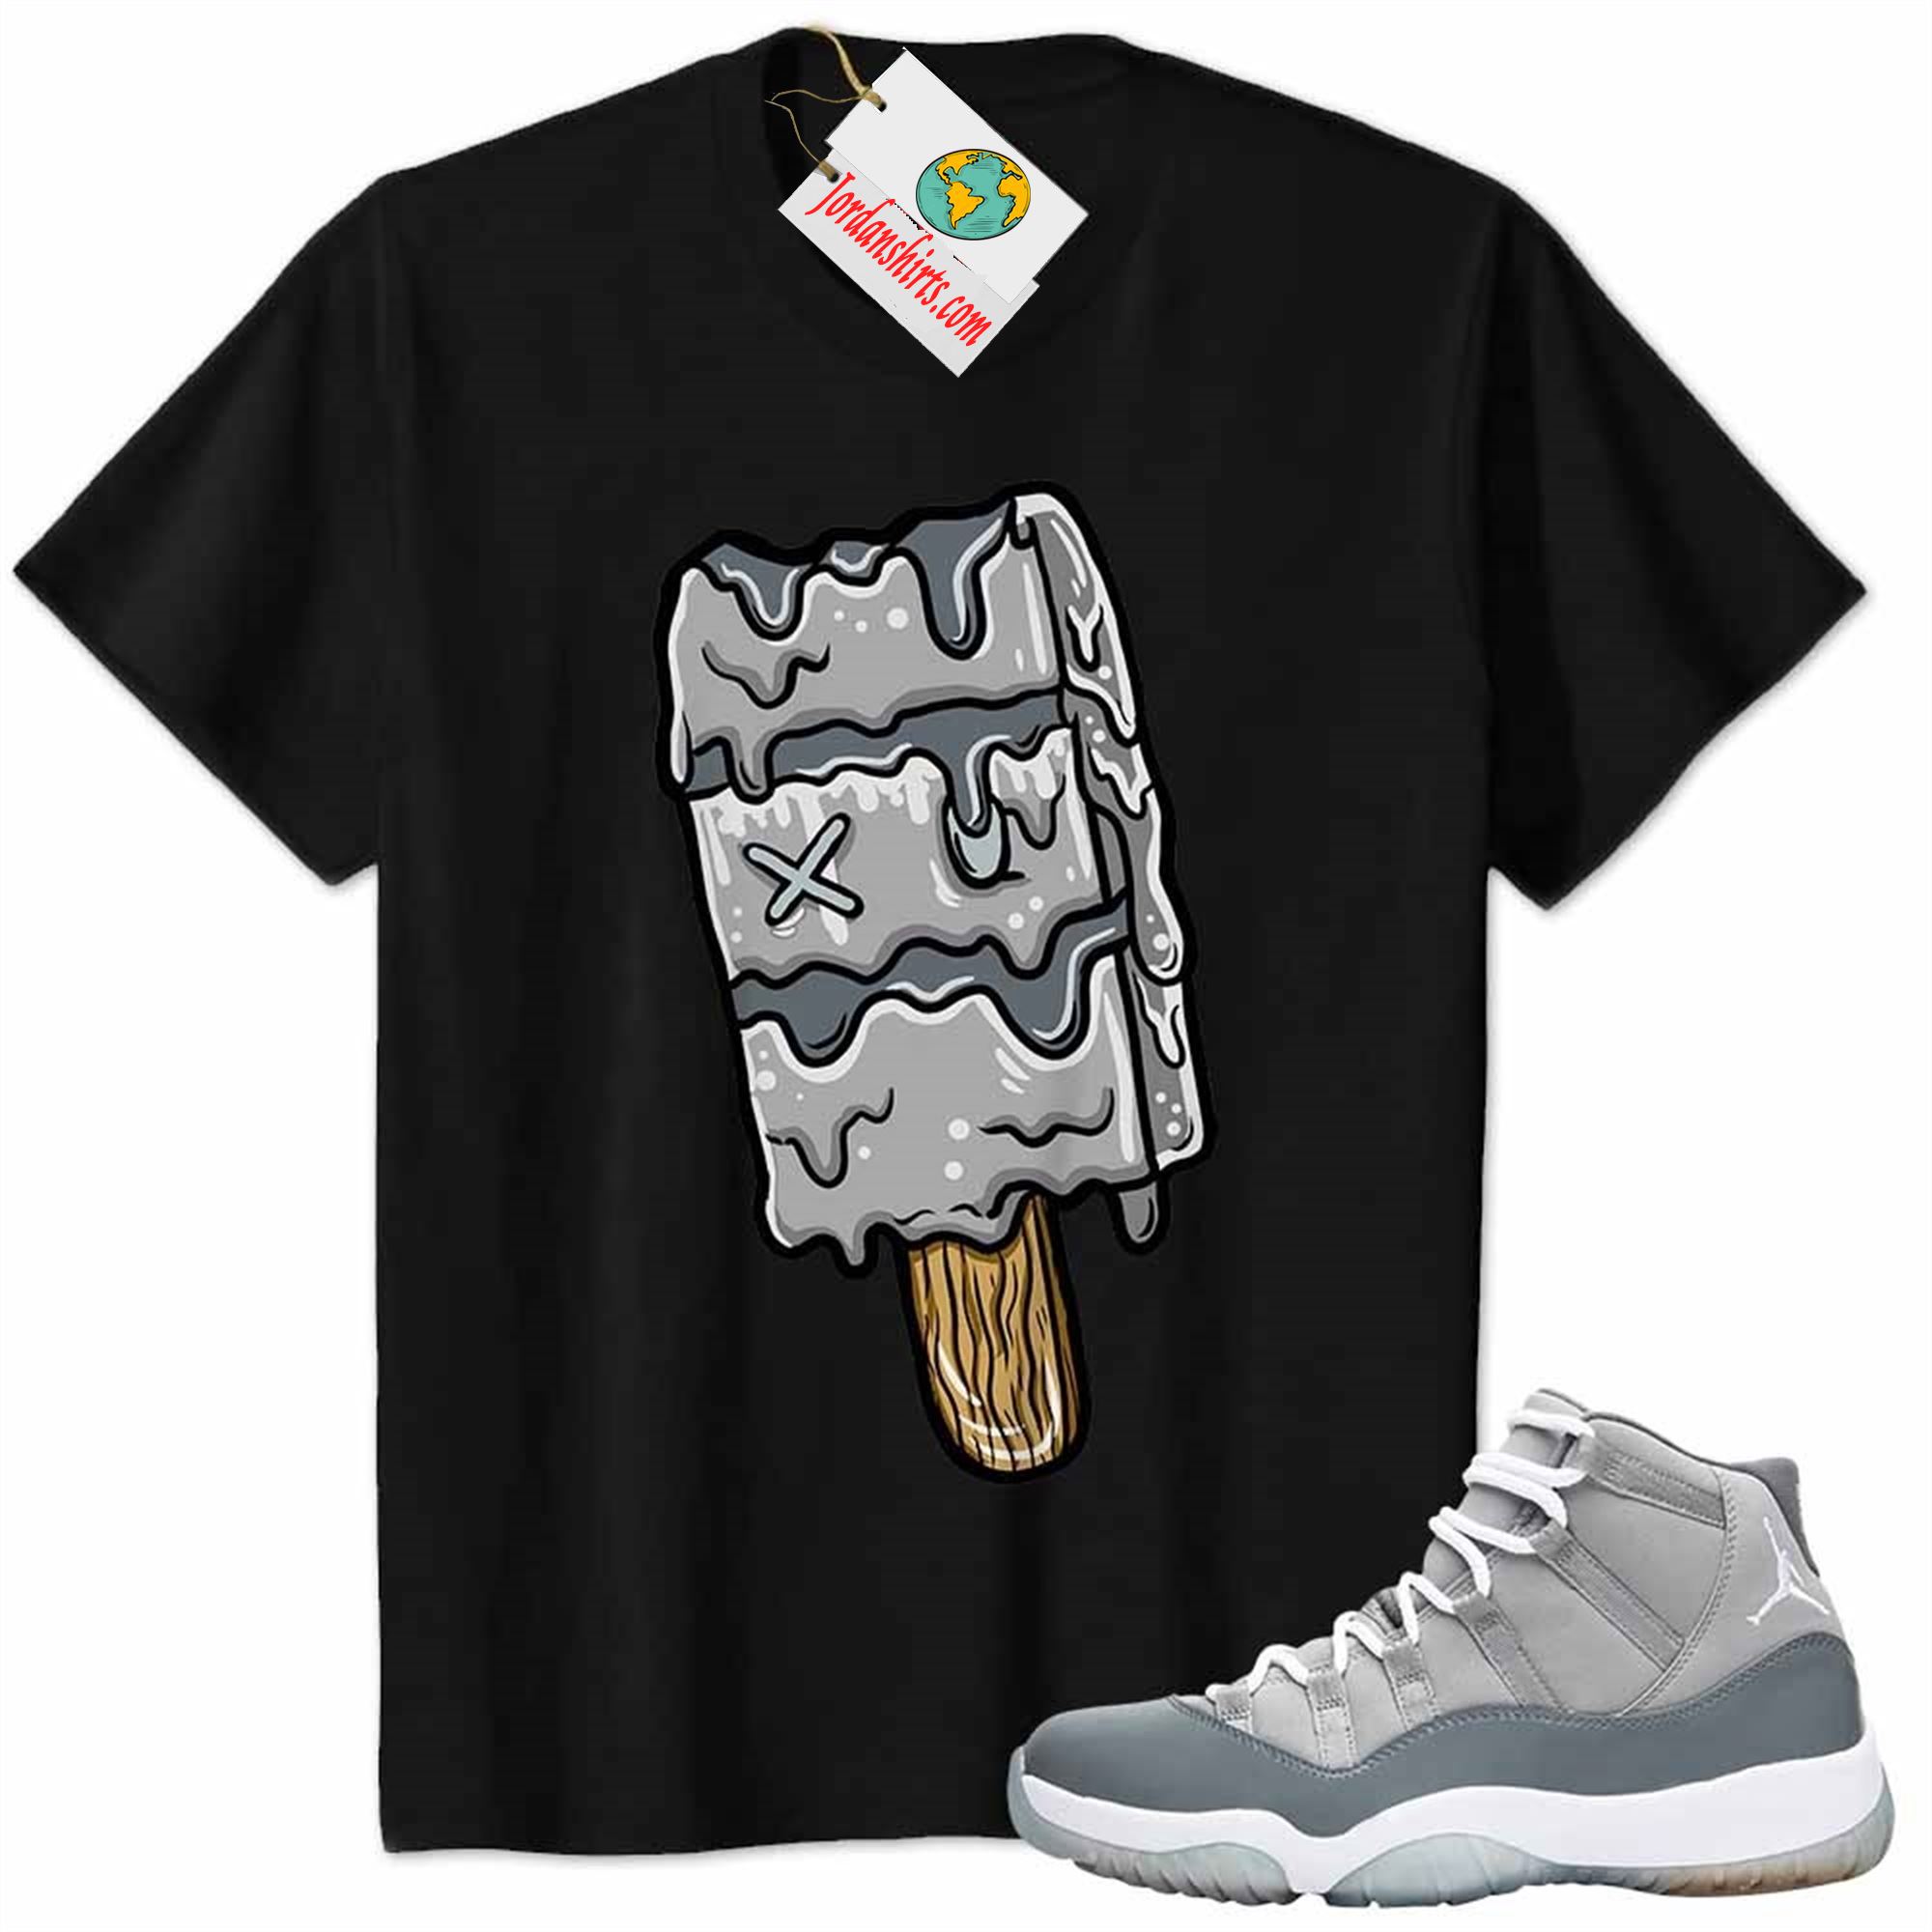 Jordan 11 Shirt, Ice Cream Dripping Black Air Jordan 11 Cool Grey 11s Size Up To 5xl